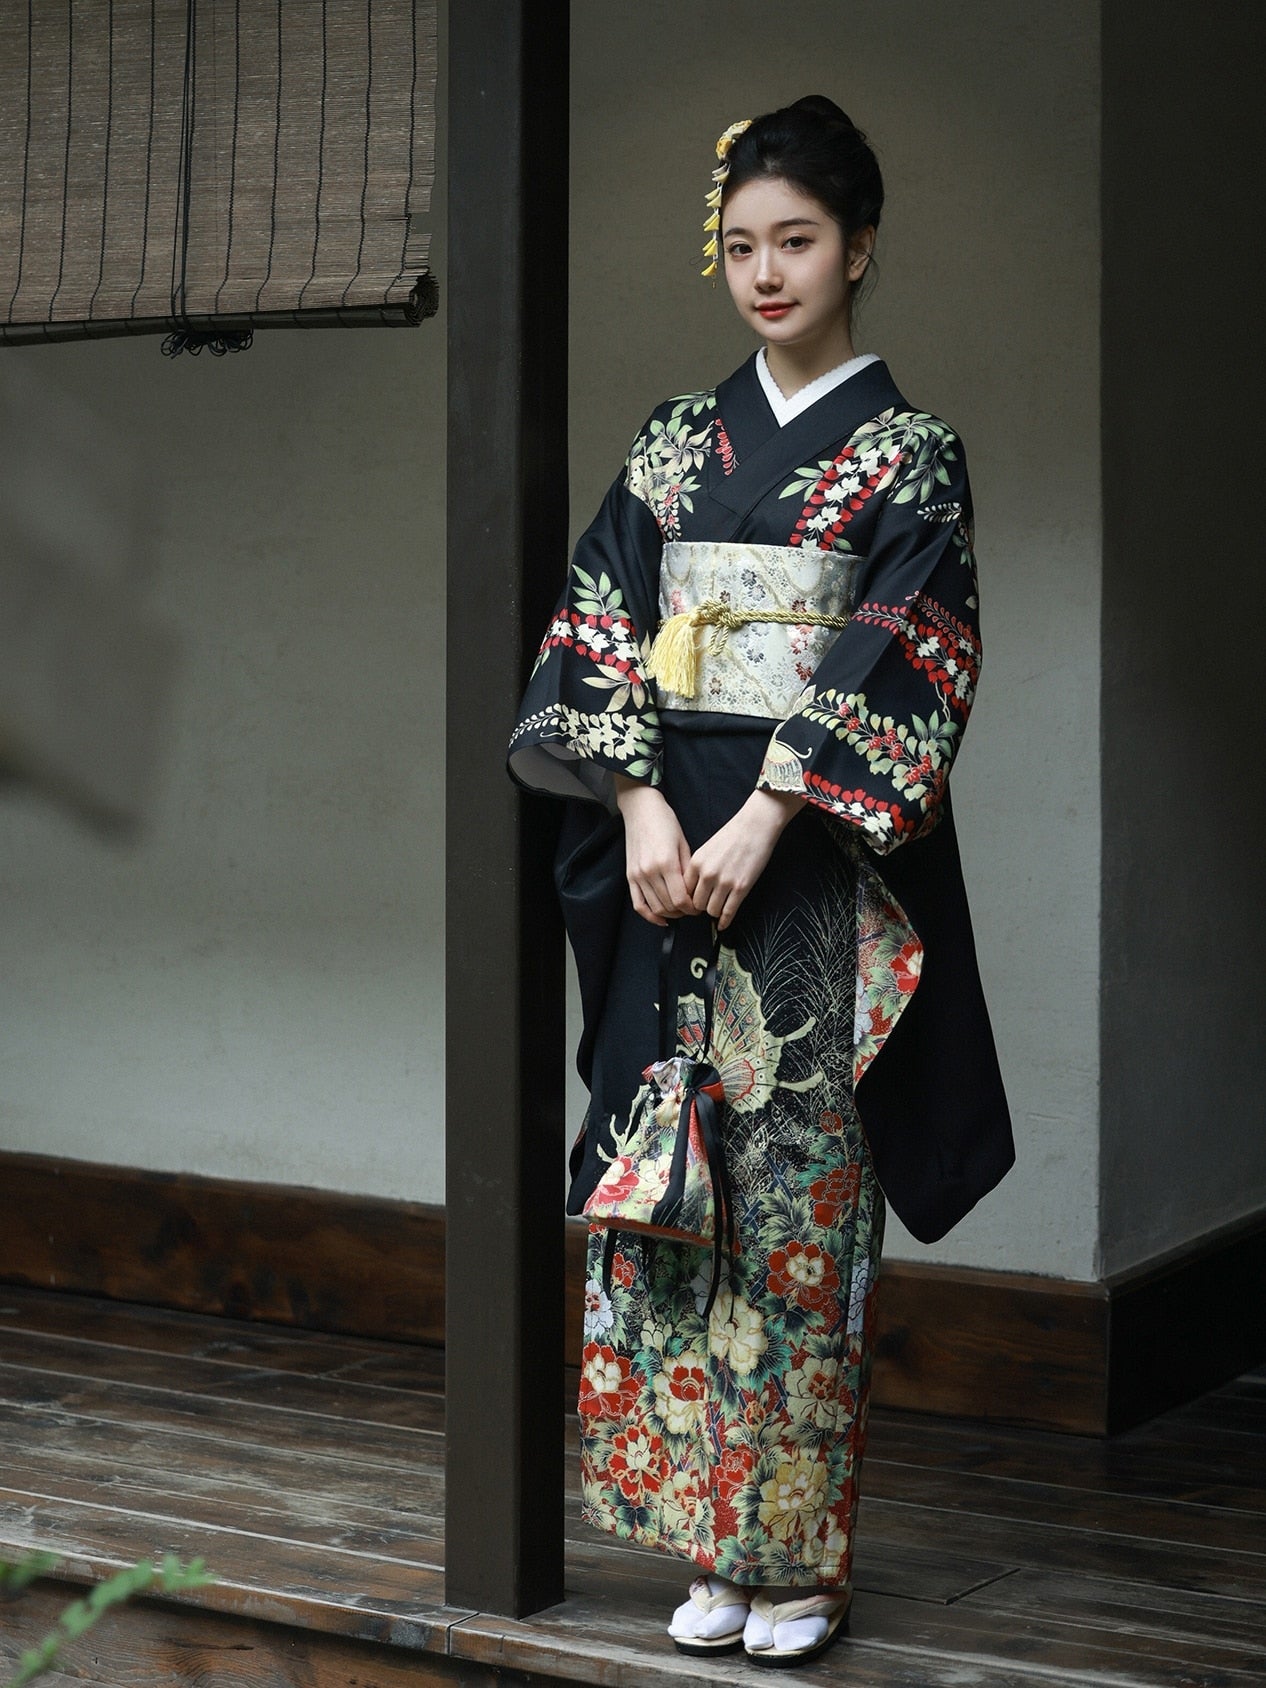 Traditional Kimono Long Sleeves – Japanese Oni Masks